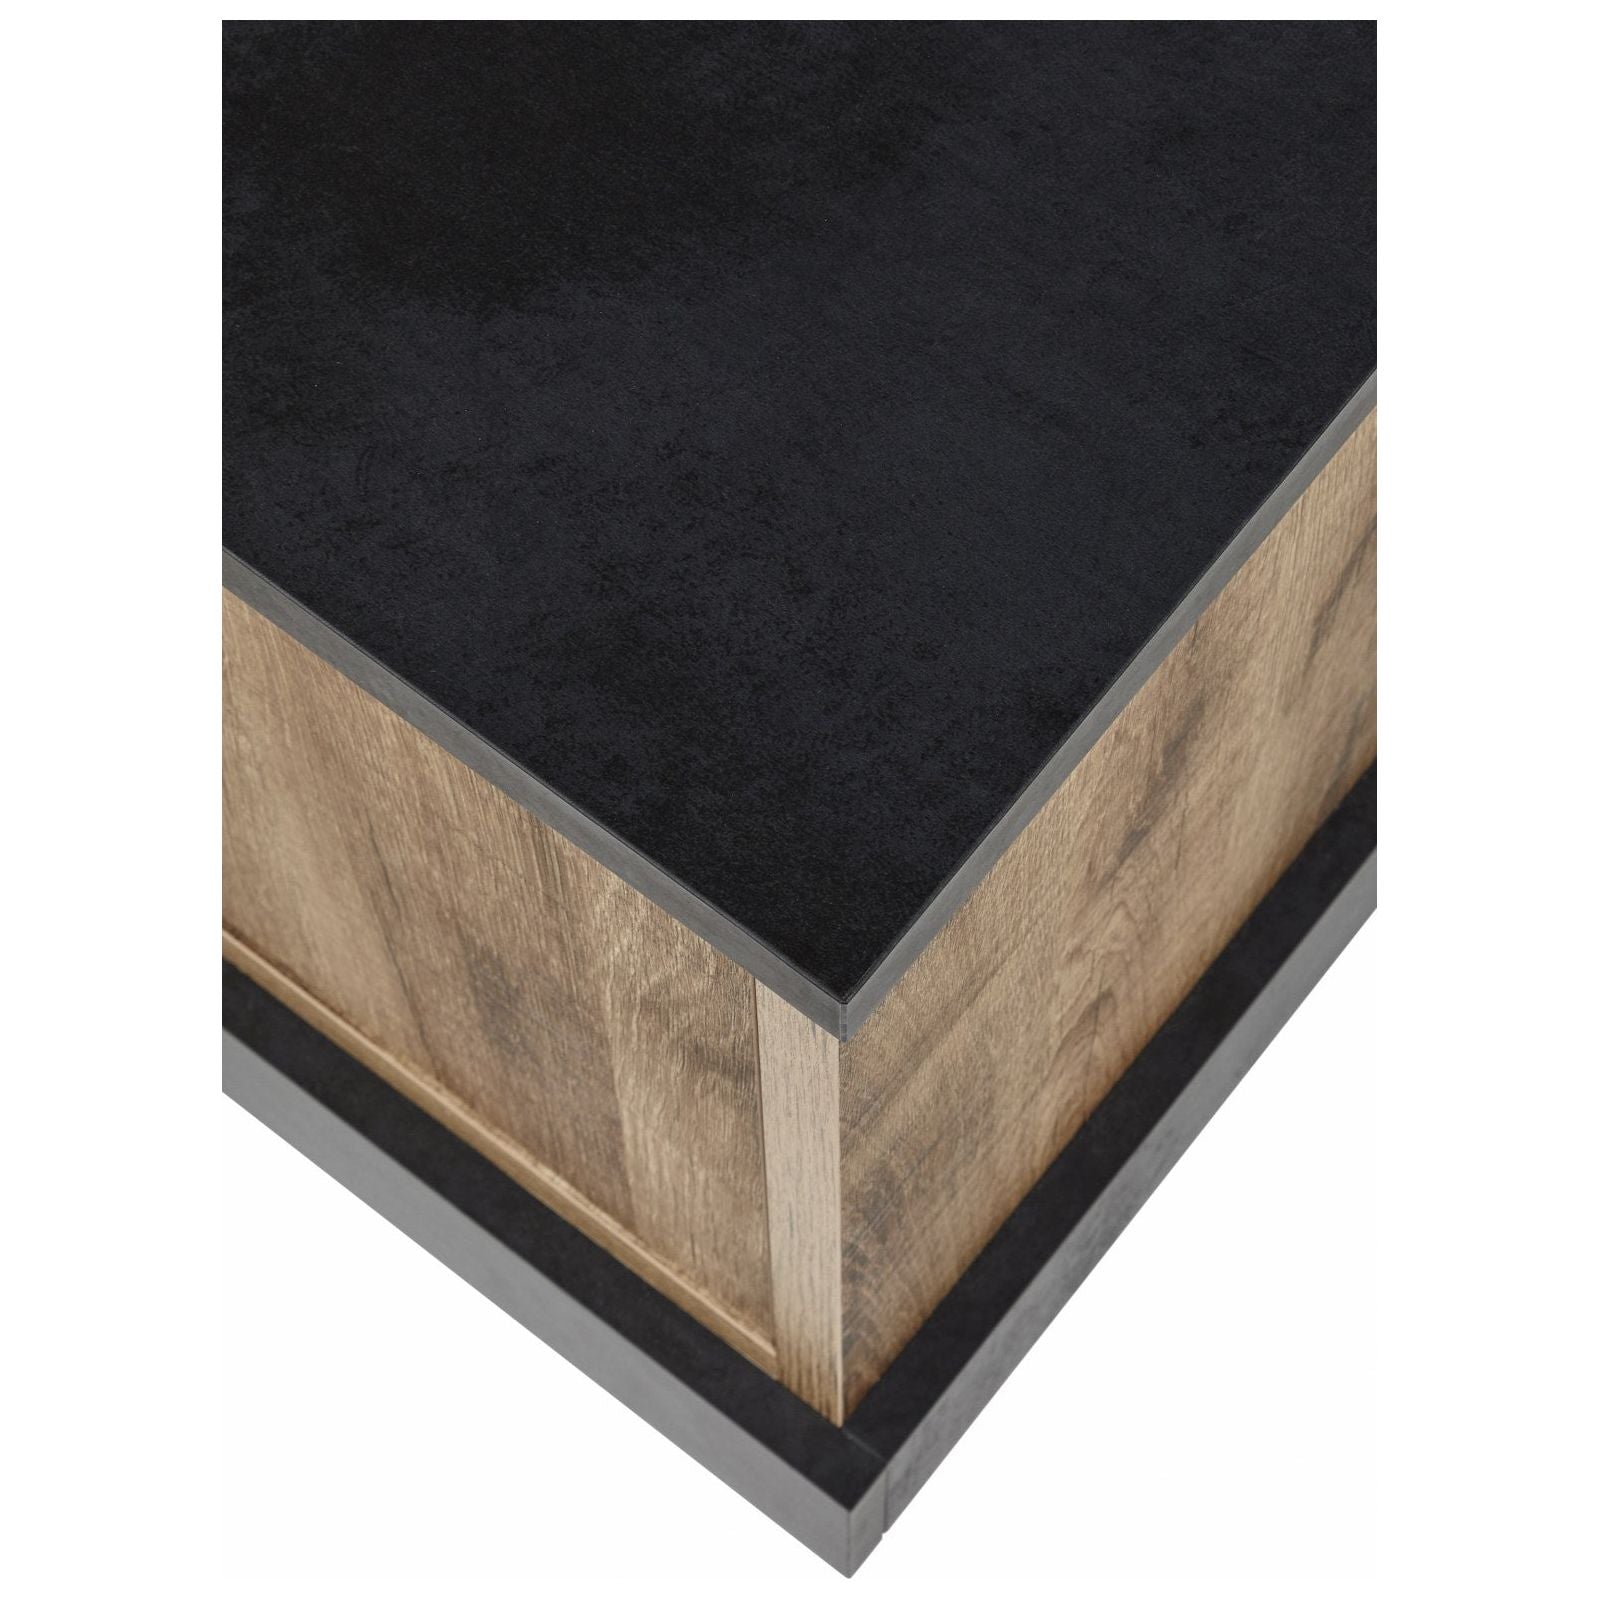 TV cabinet | Furniture series Cologne | brown, natural, black | 142